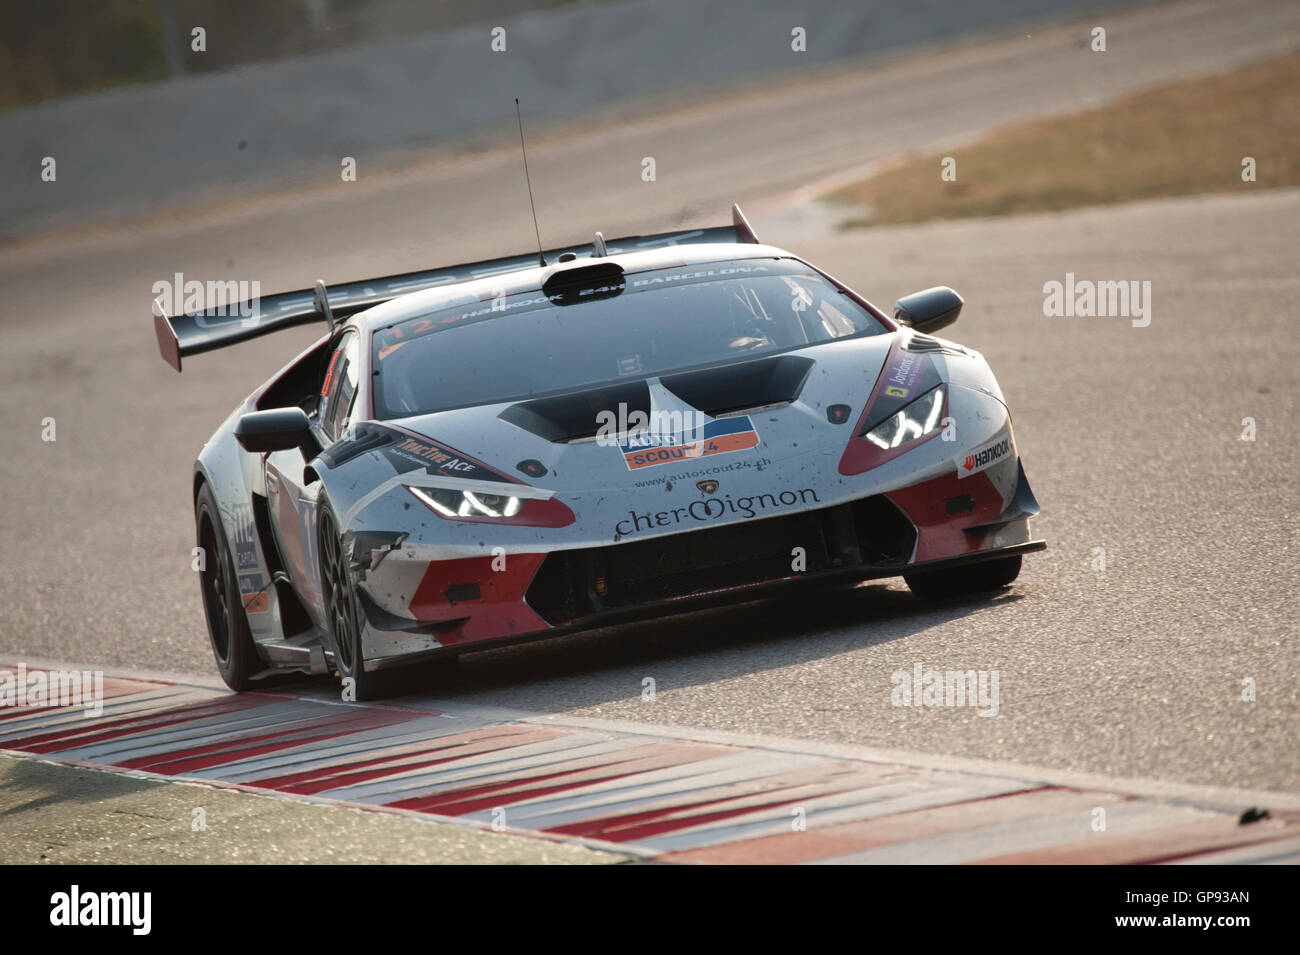 Lamborghini huracan super trofeo hi-res stock photography and images - Alamy